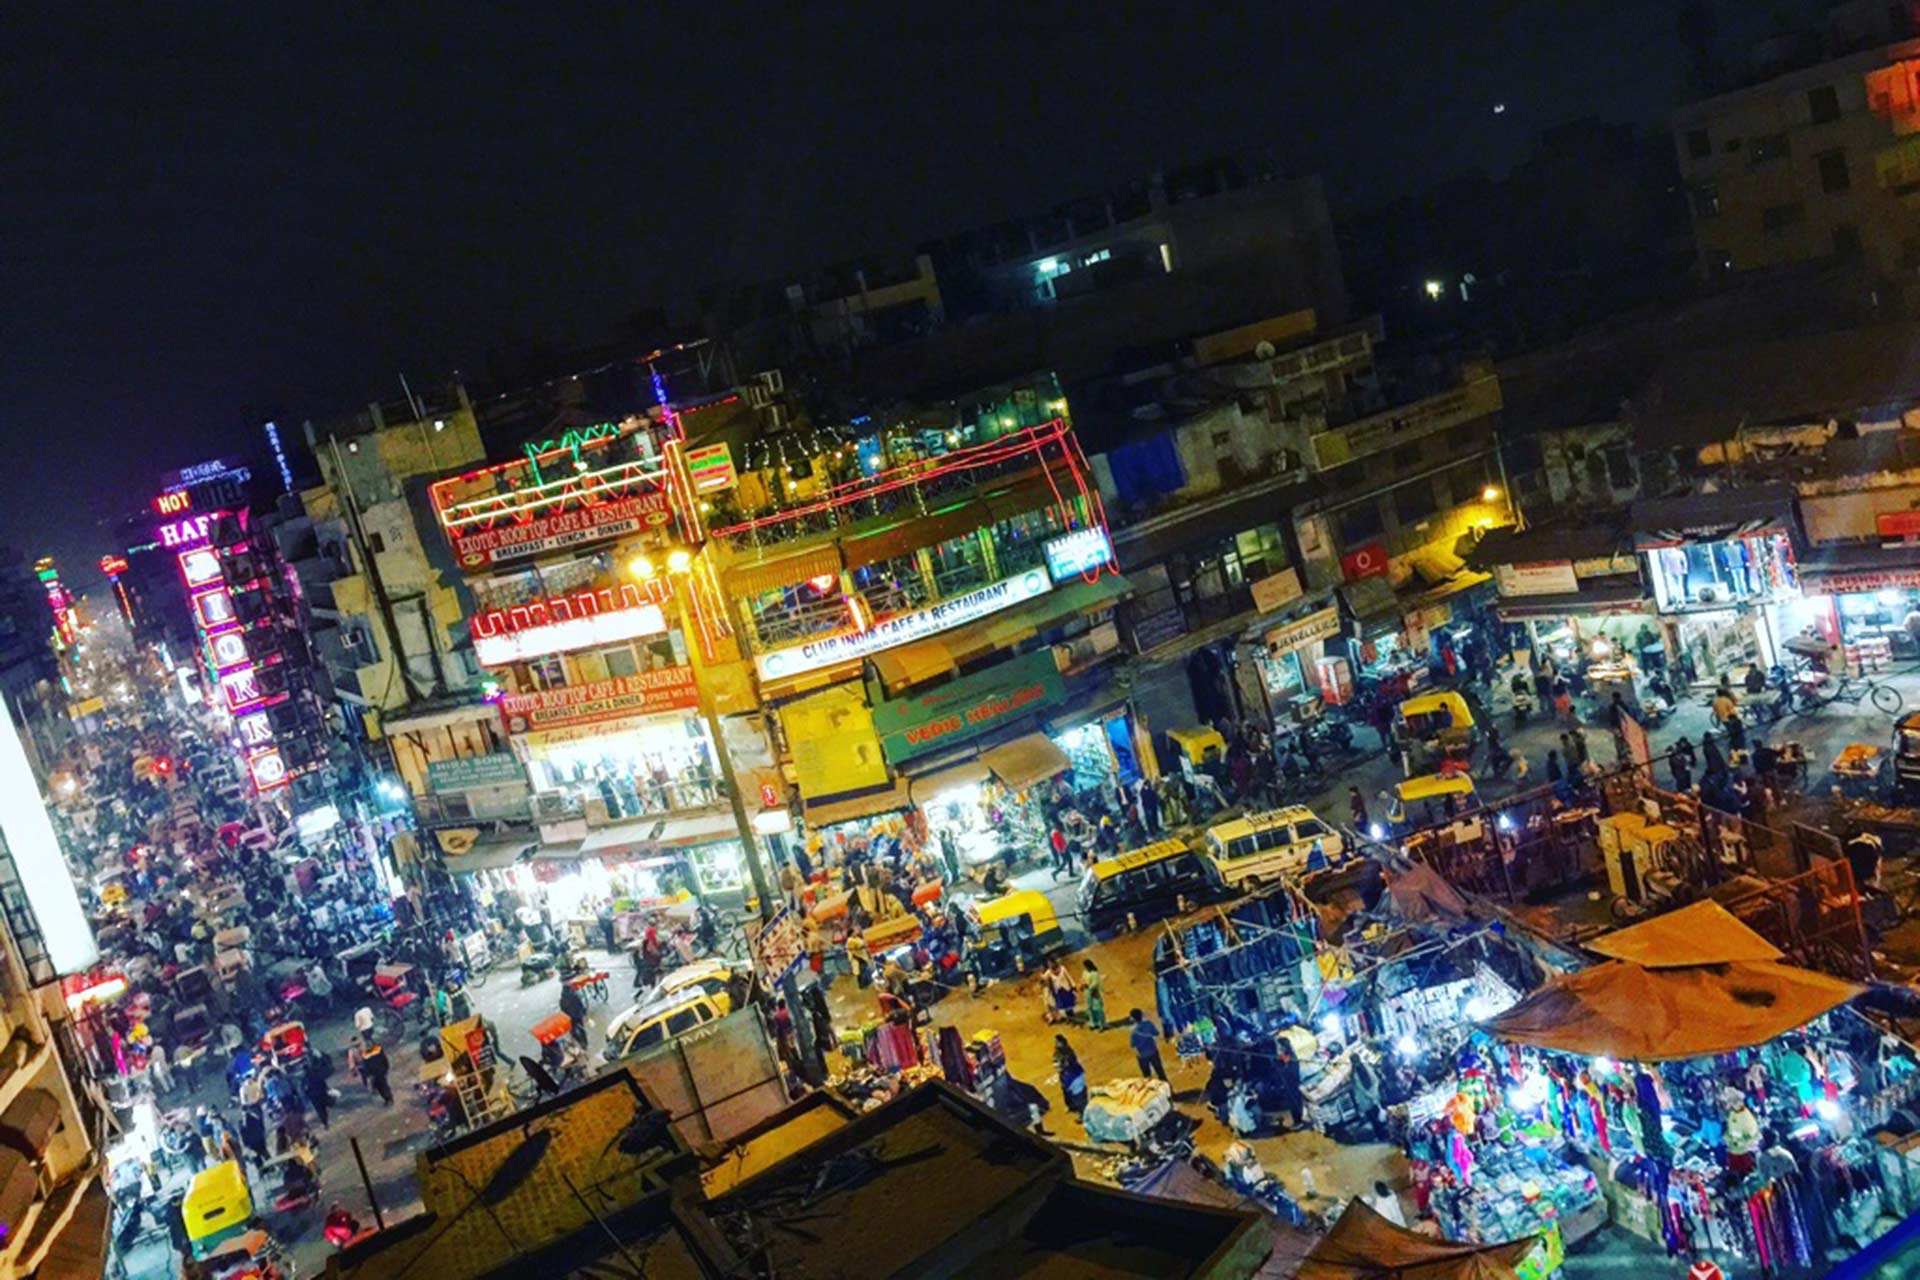 Night market in India. India reflection